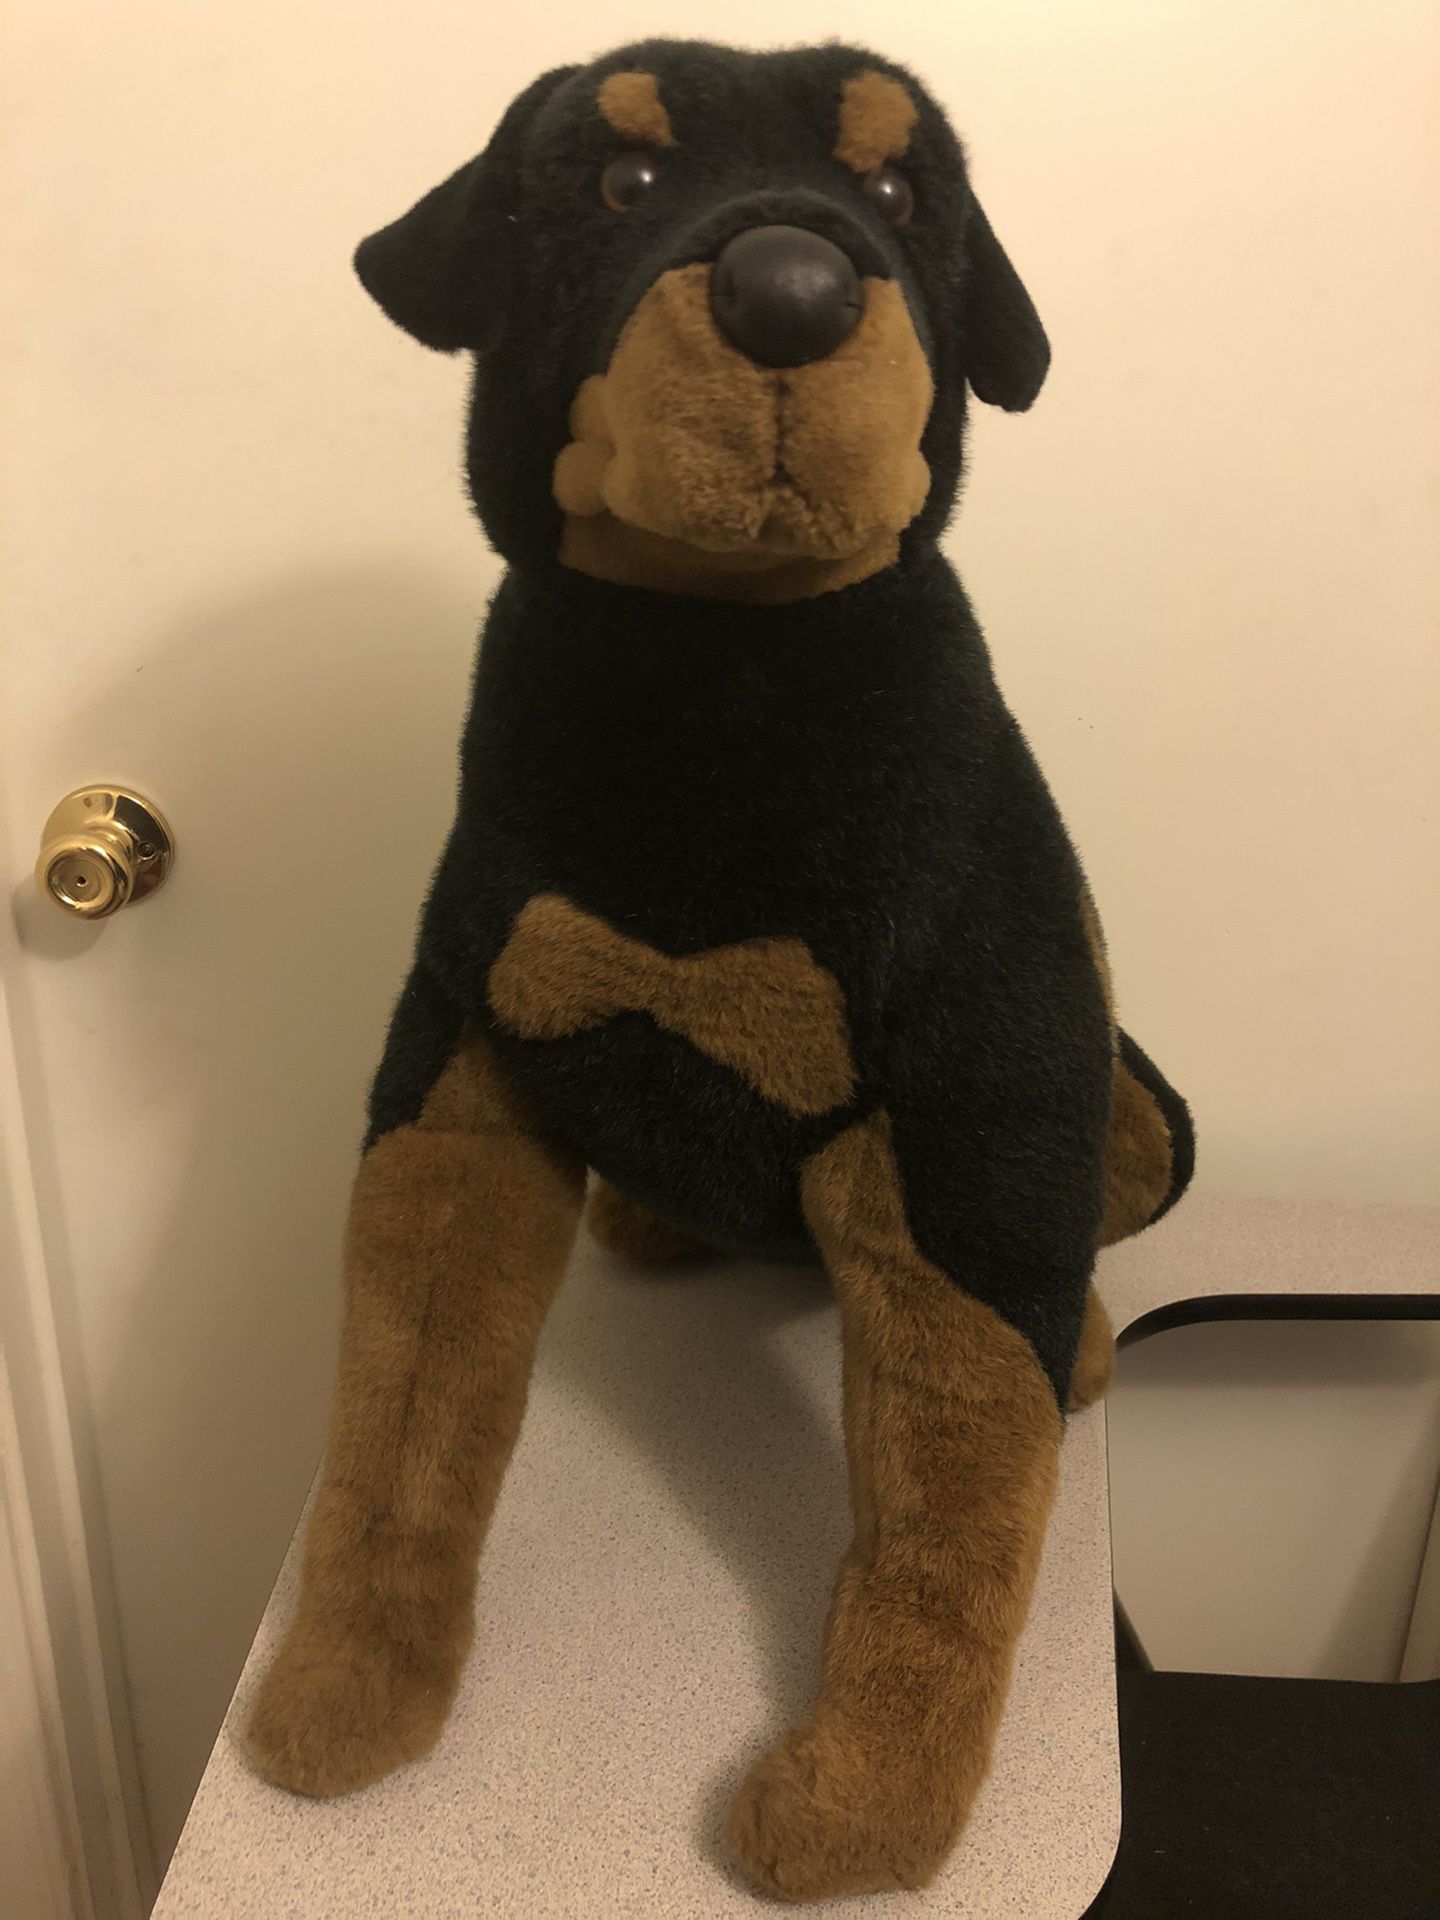 Rottweiler stuffed animal